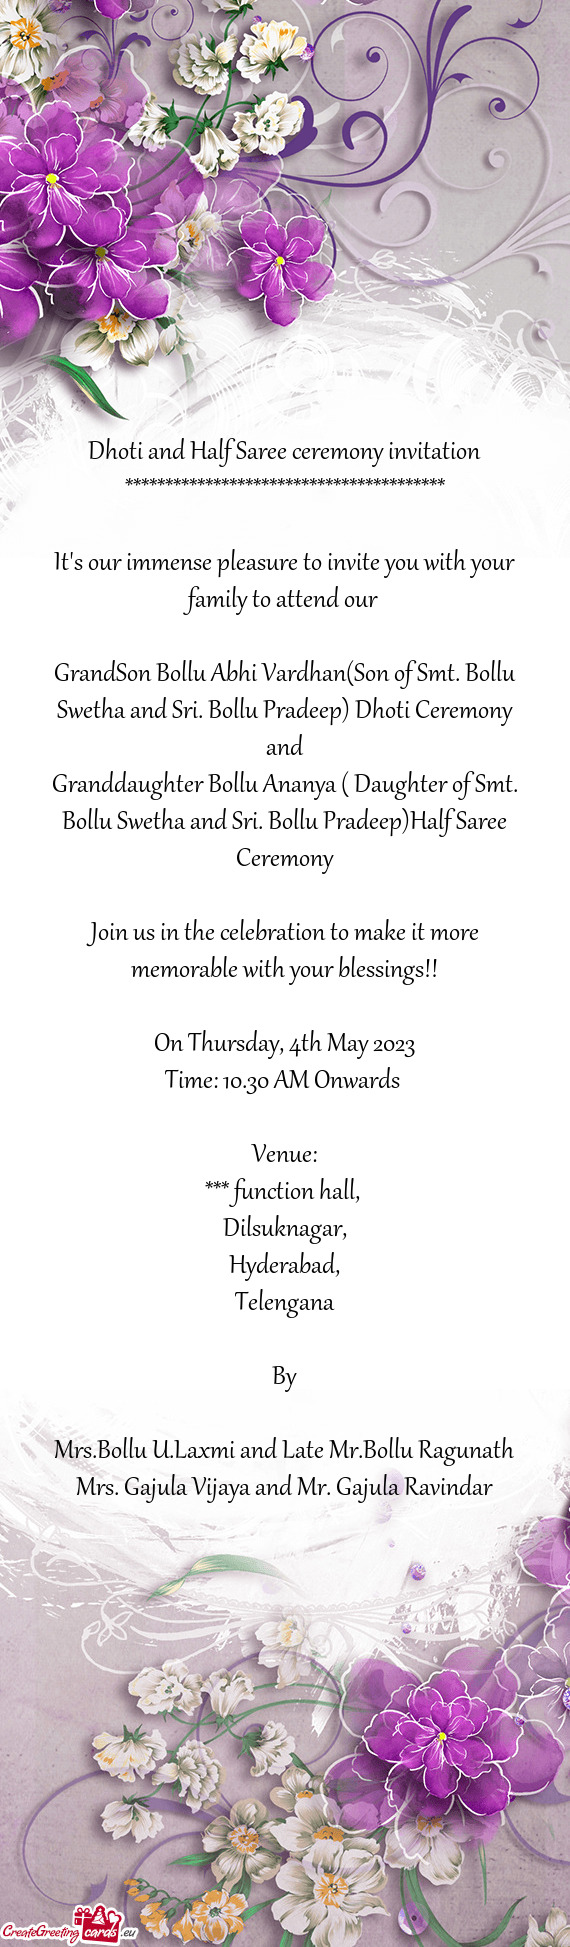 GrandSon Bollu Abhi Vardhan(Son of Smt. Bollu Swetha and Sri. Bollu Pradeep) Dhoti Ceremony